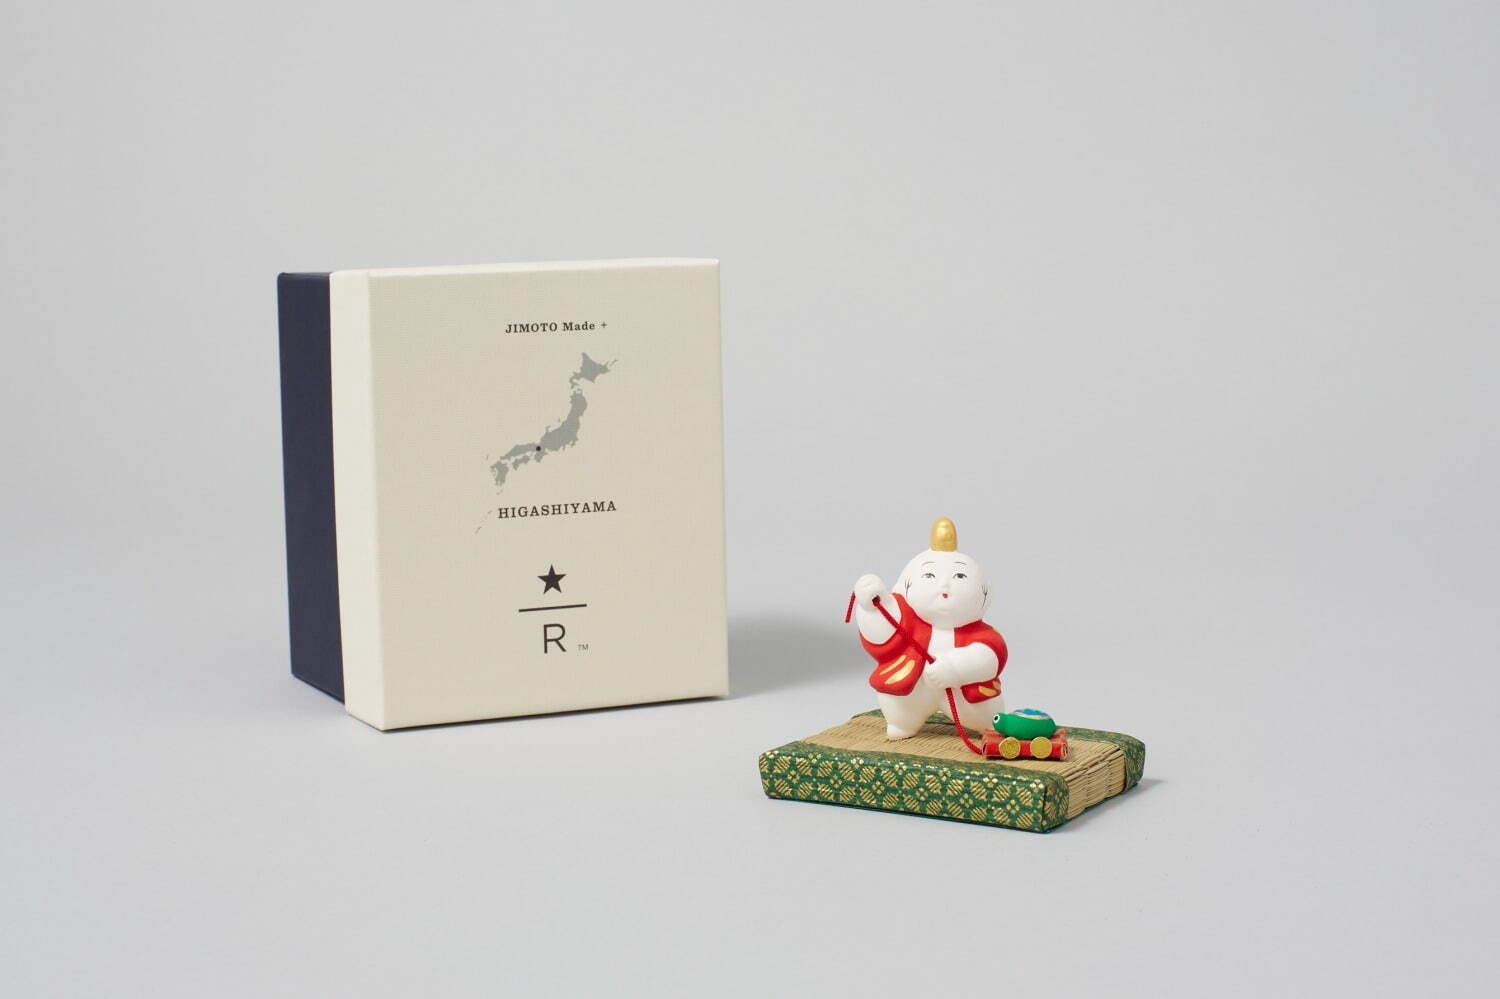 「JIMOTO Made+ 東山 小御所人形亀持ち」4,500円